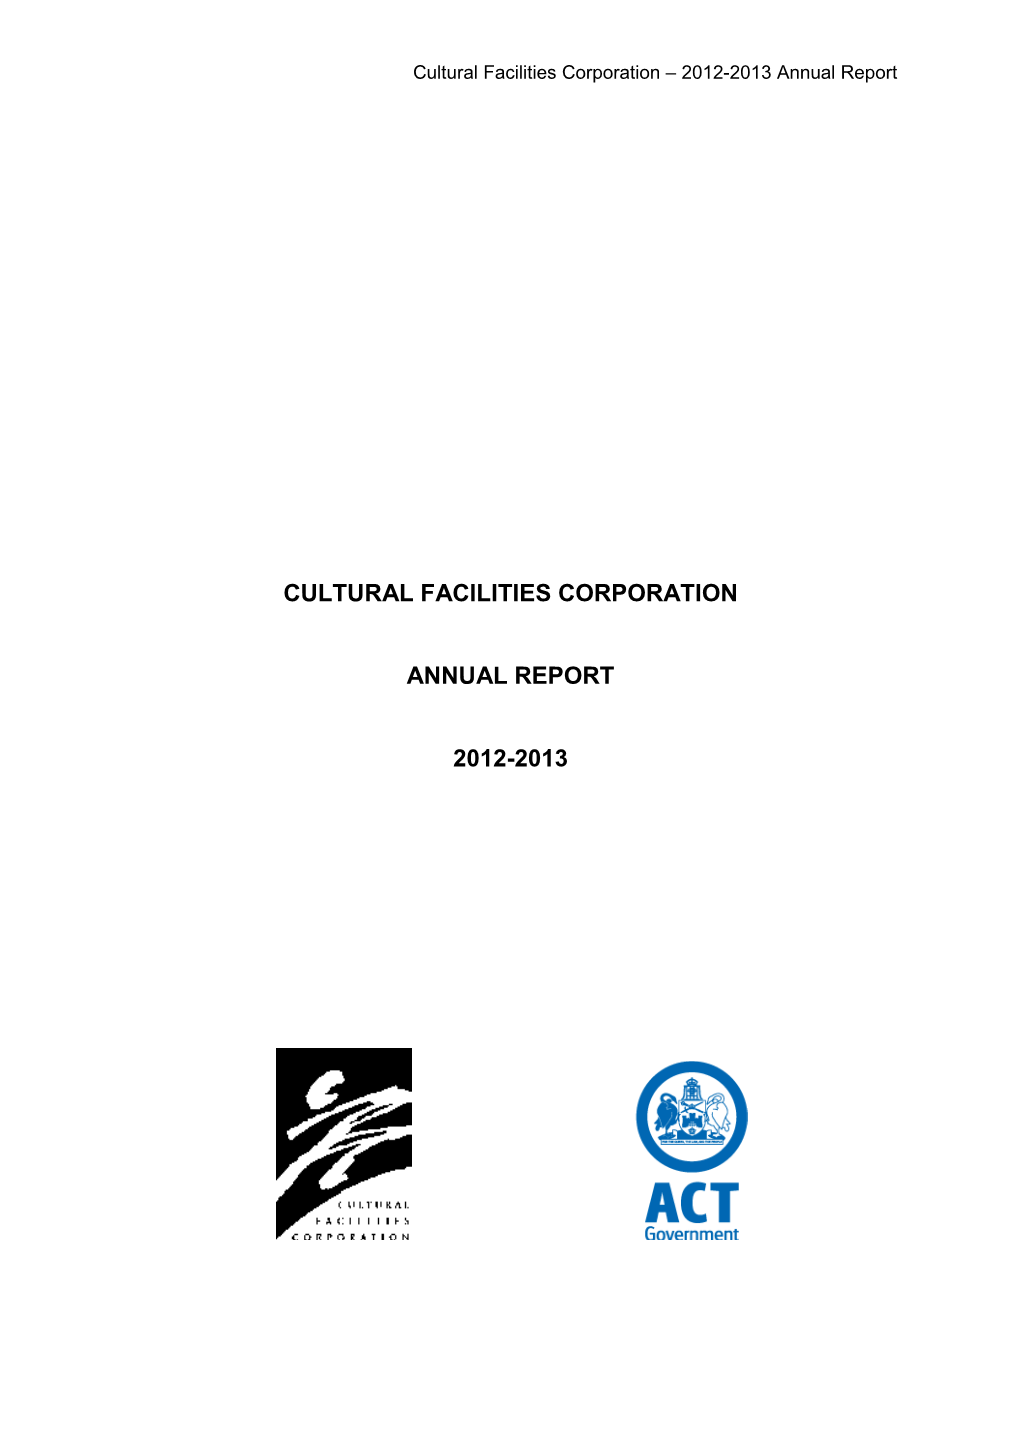 Cultural Facilities Corporation Annual Report